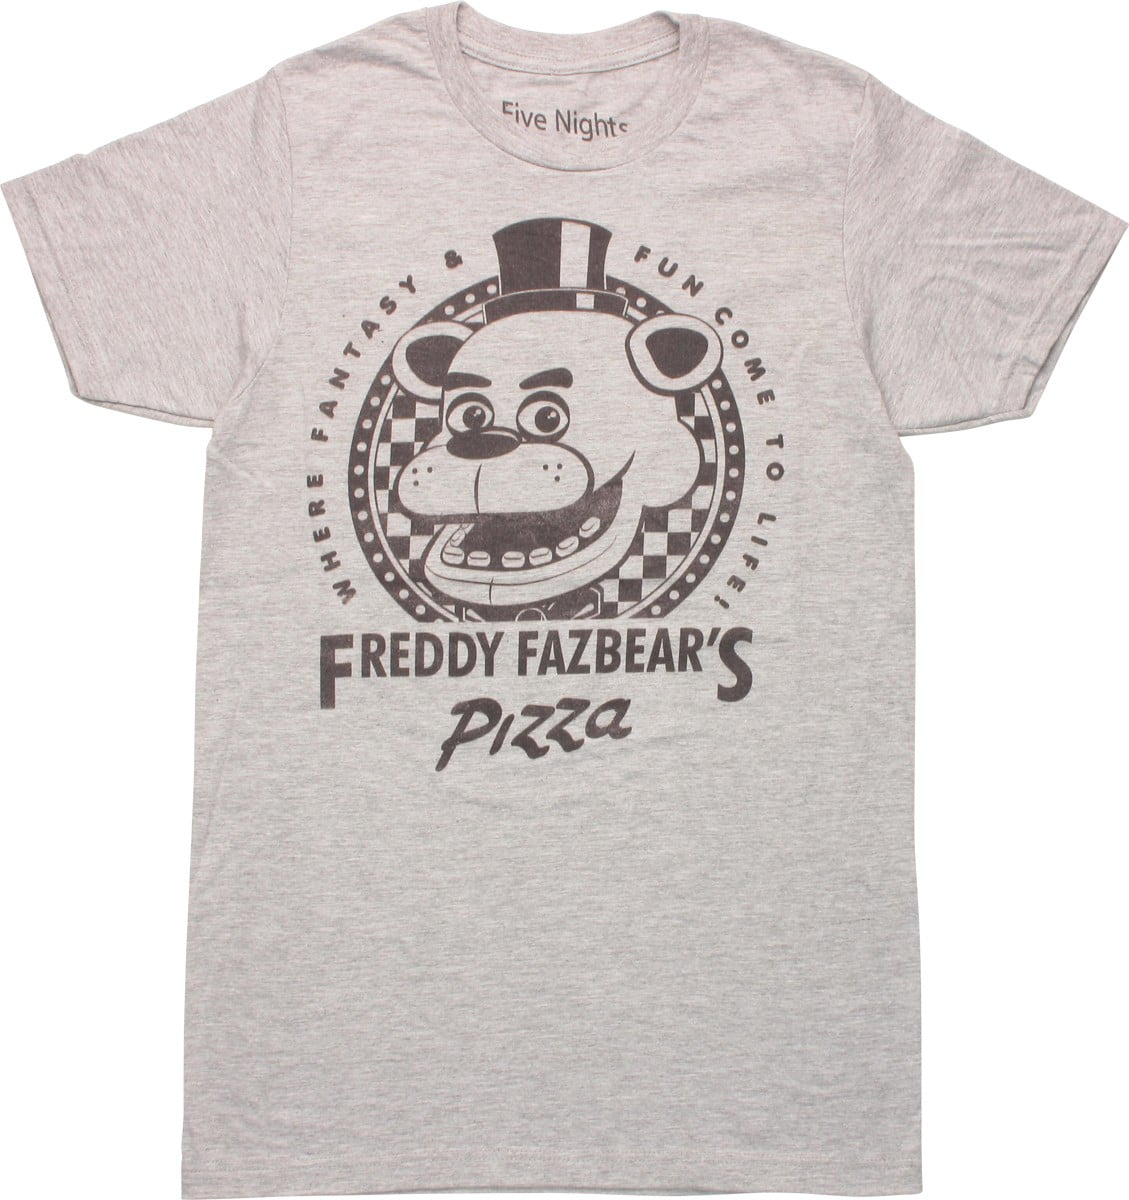 Five Nights at Freddys Fazbears Pizza Boys Gray T-Shirt